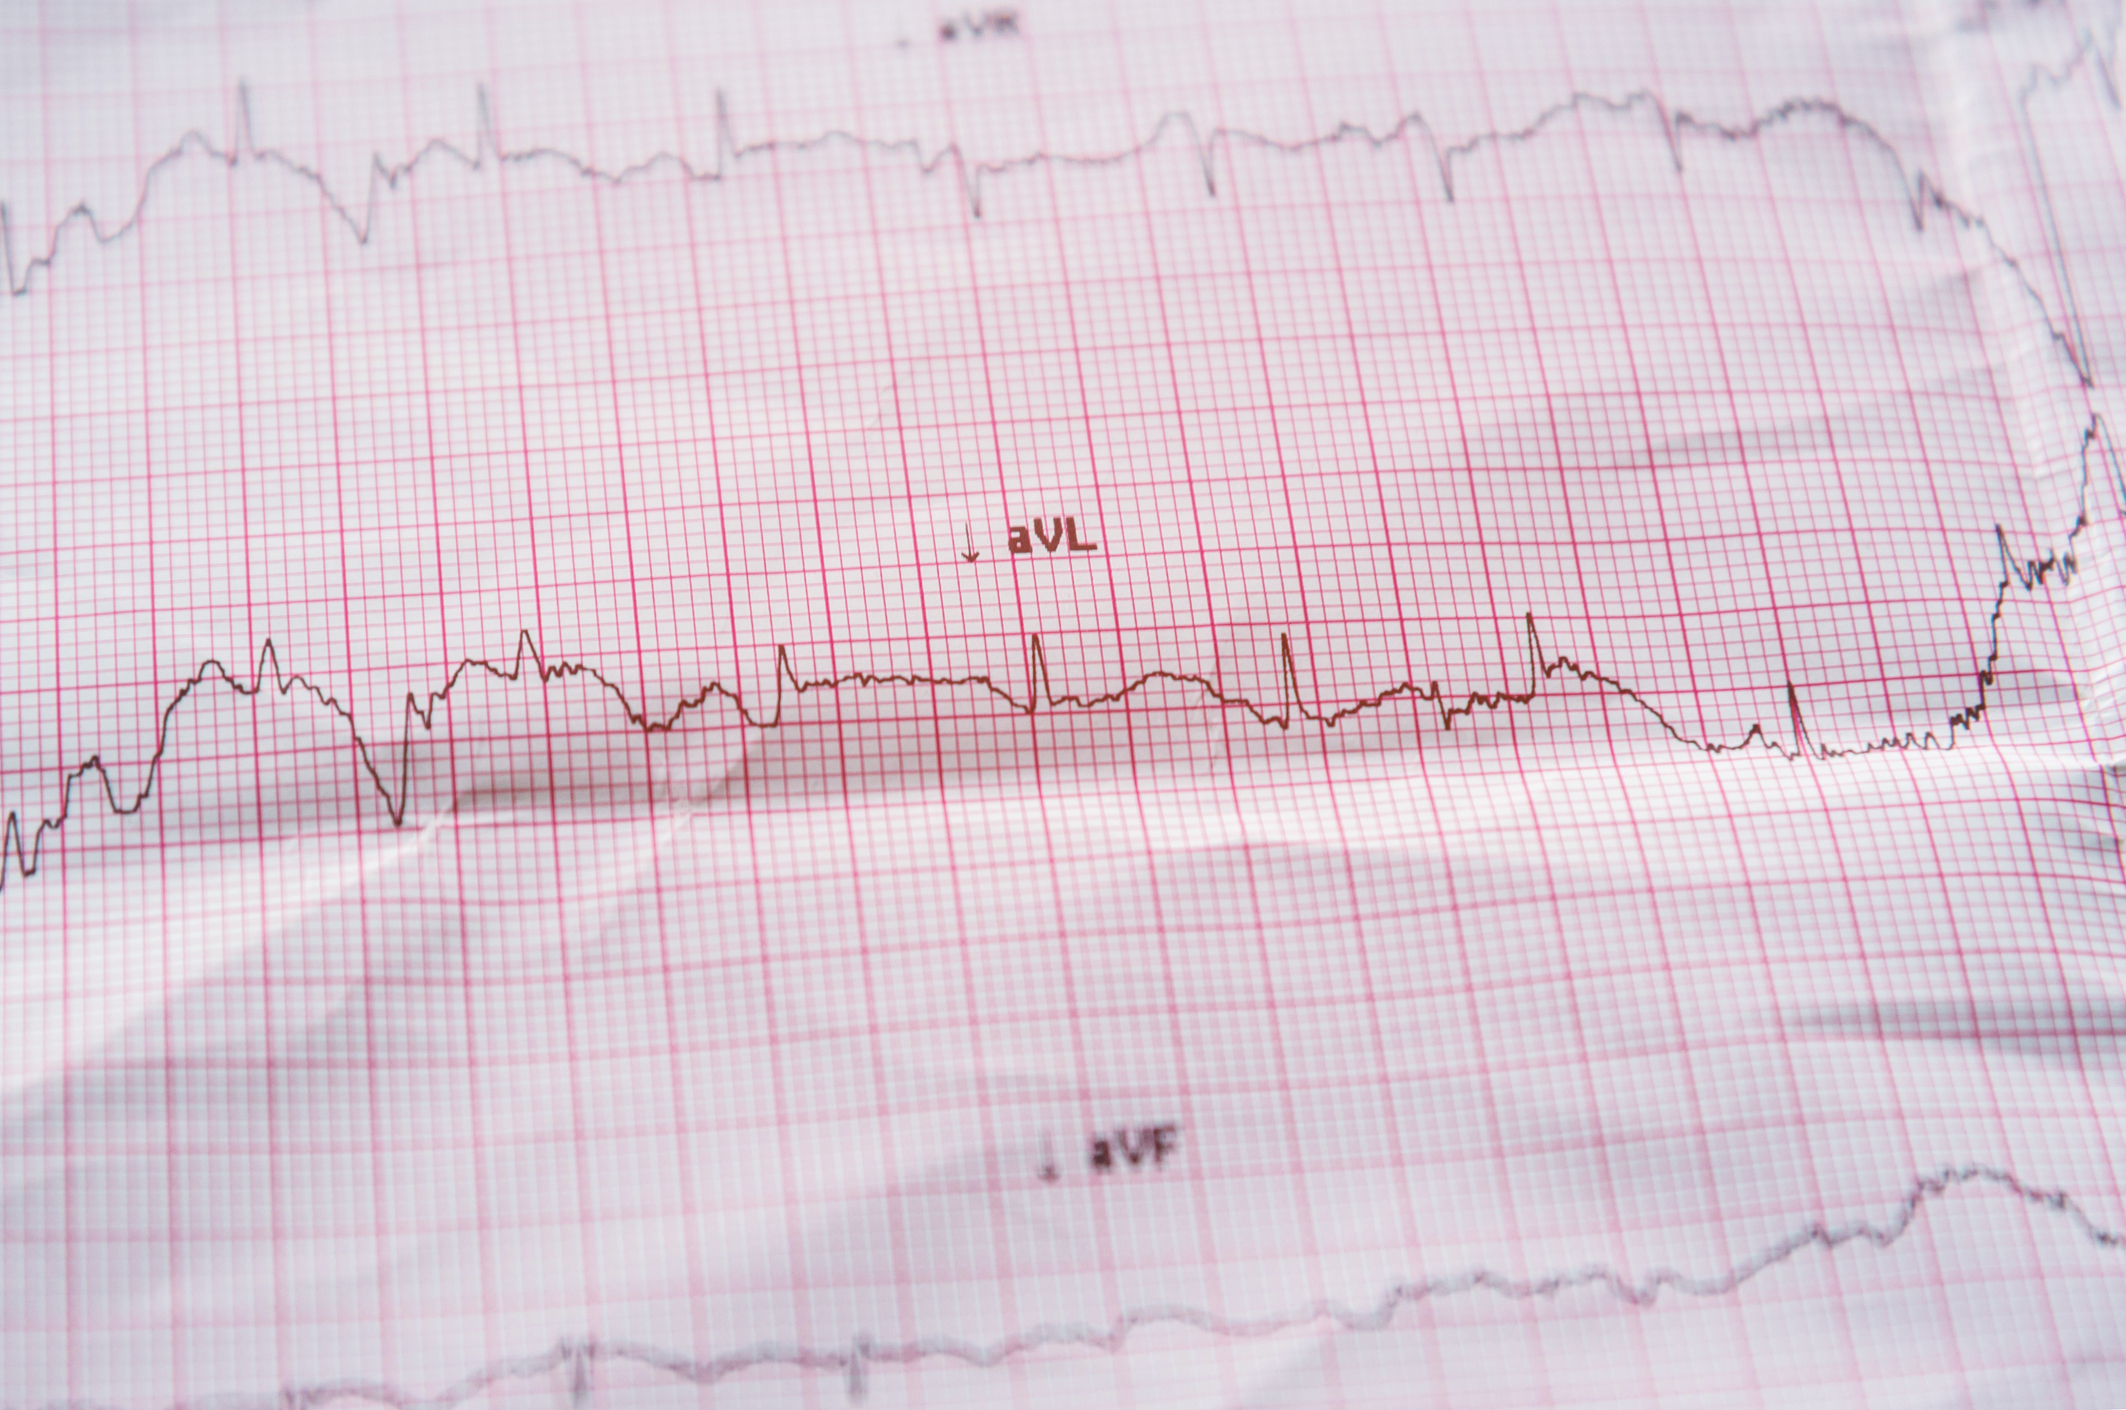 An electrocardiogram showing heart disease